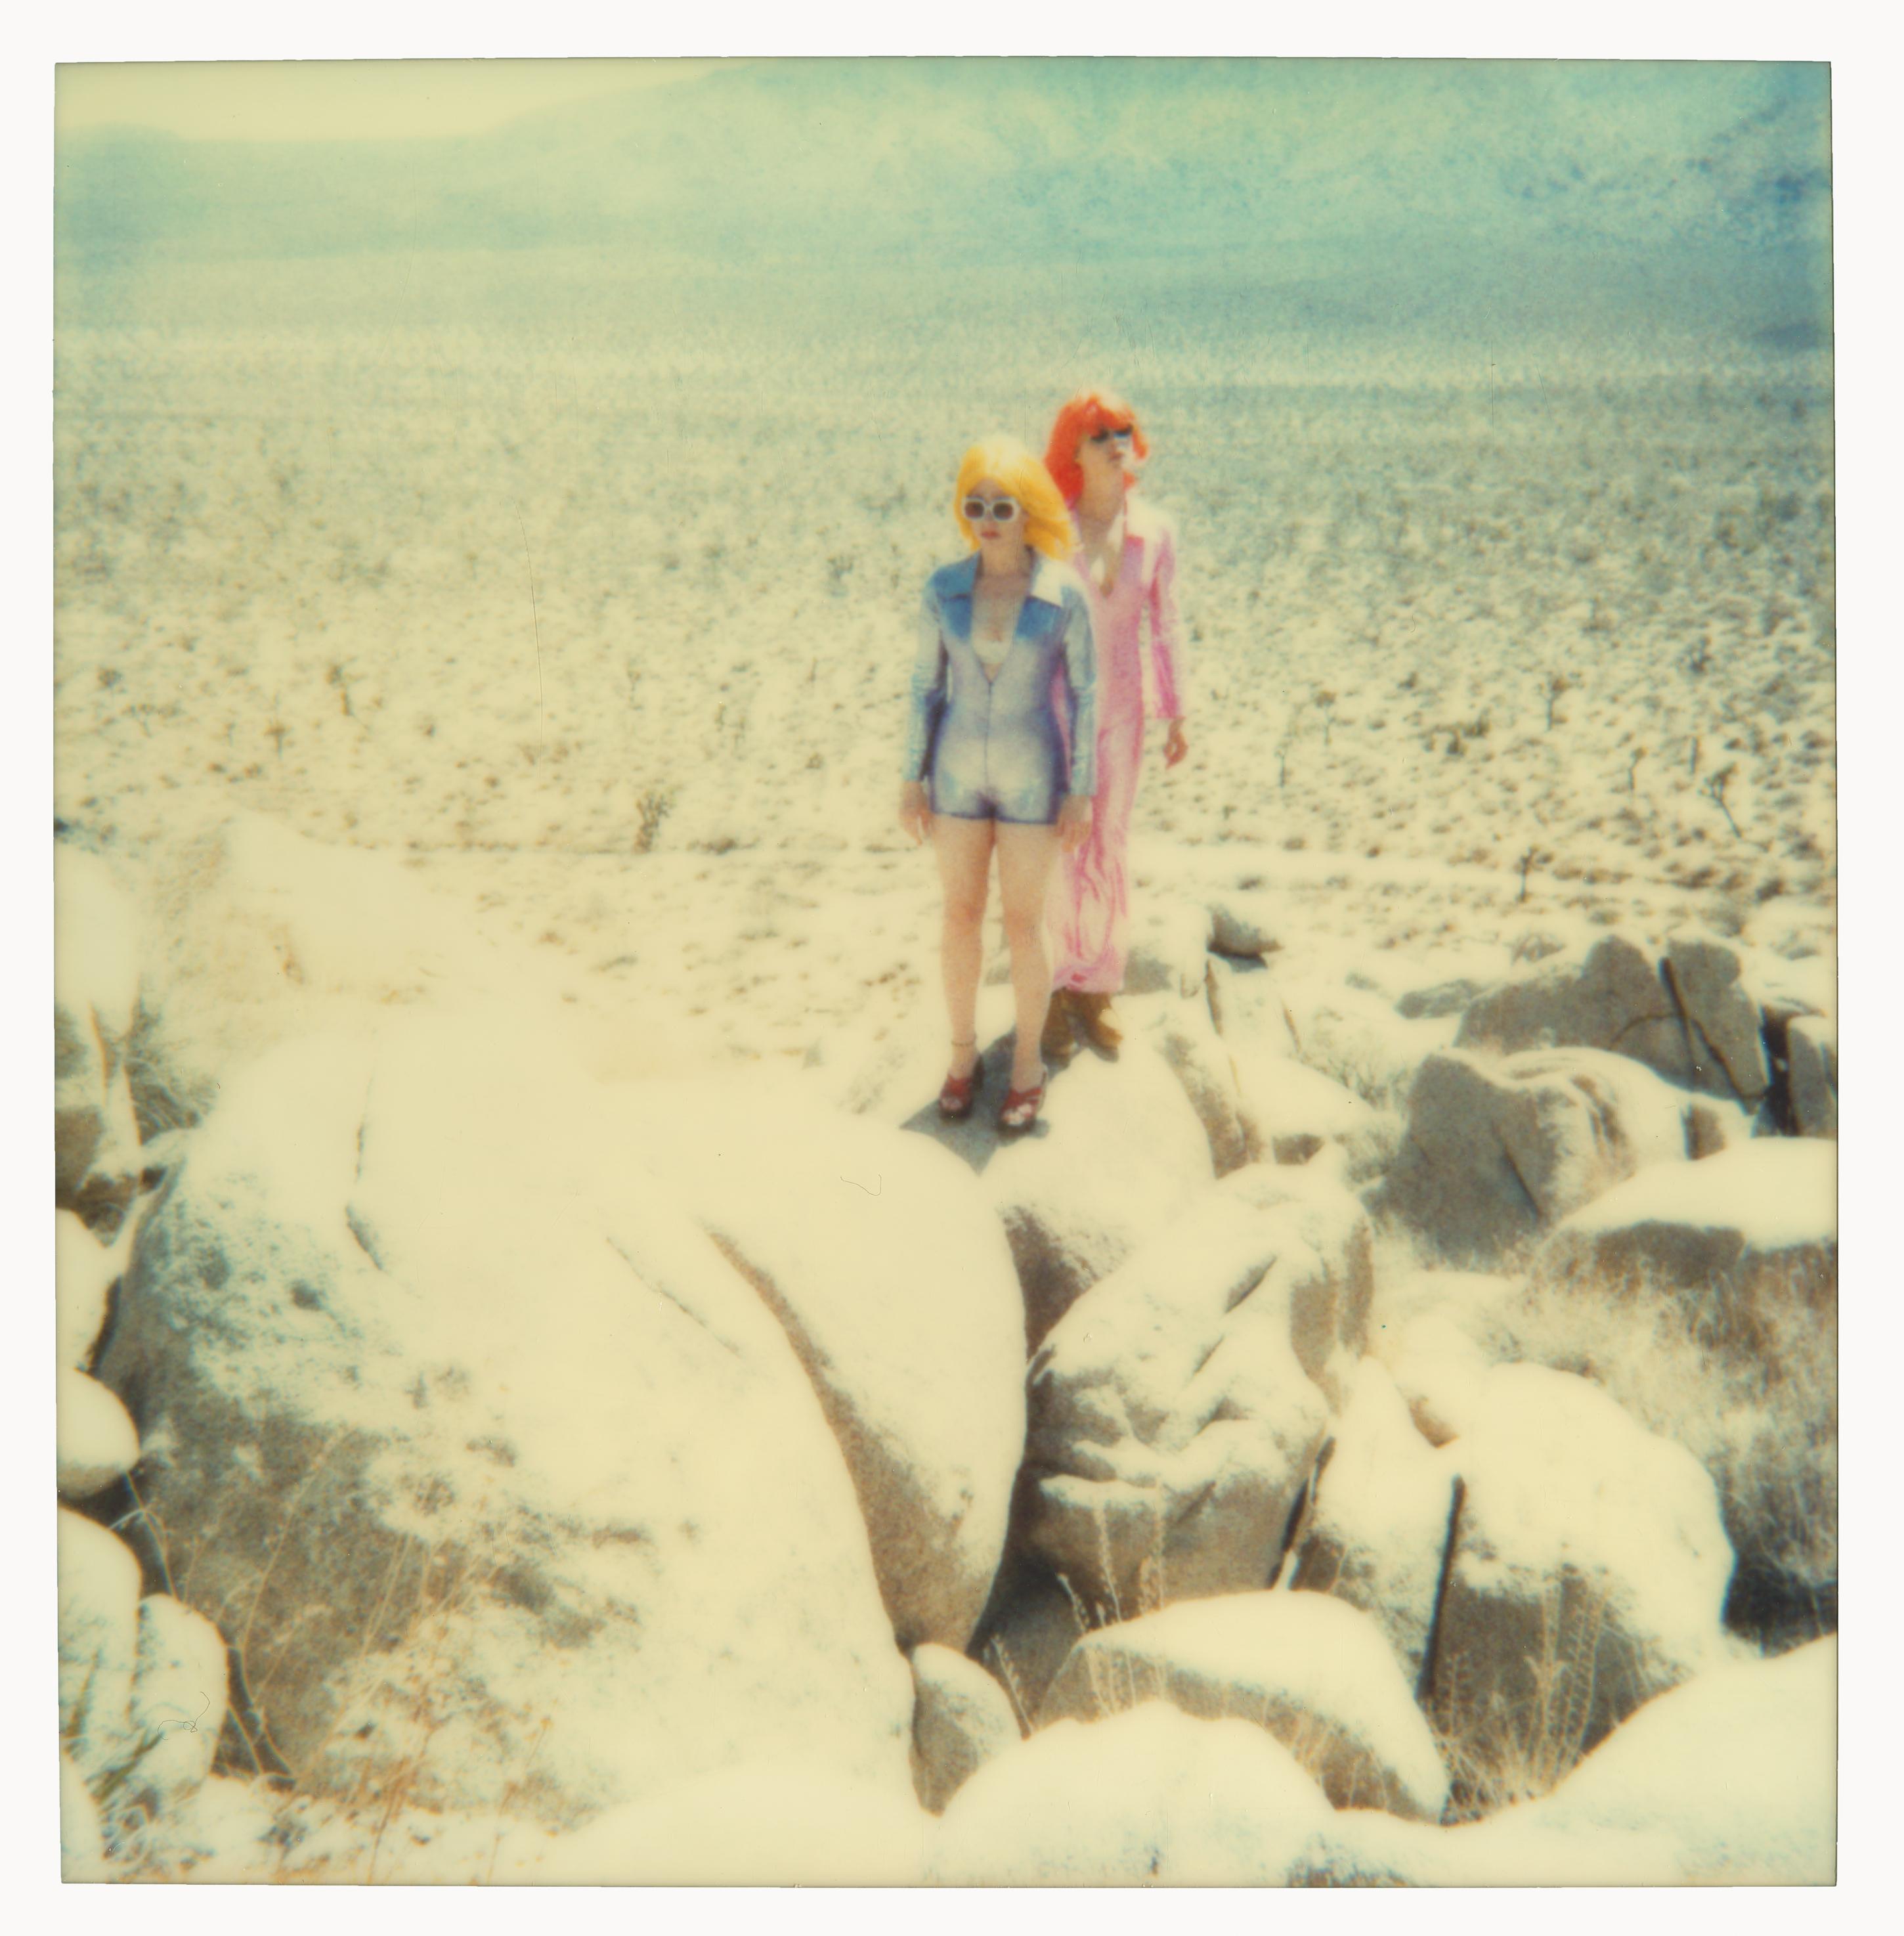 Stefanie Schneider Portrait Photograph - On the Rocks (Long Way Home), analog, mounted, 58x57cm, Edition 2/10 